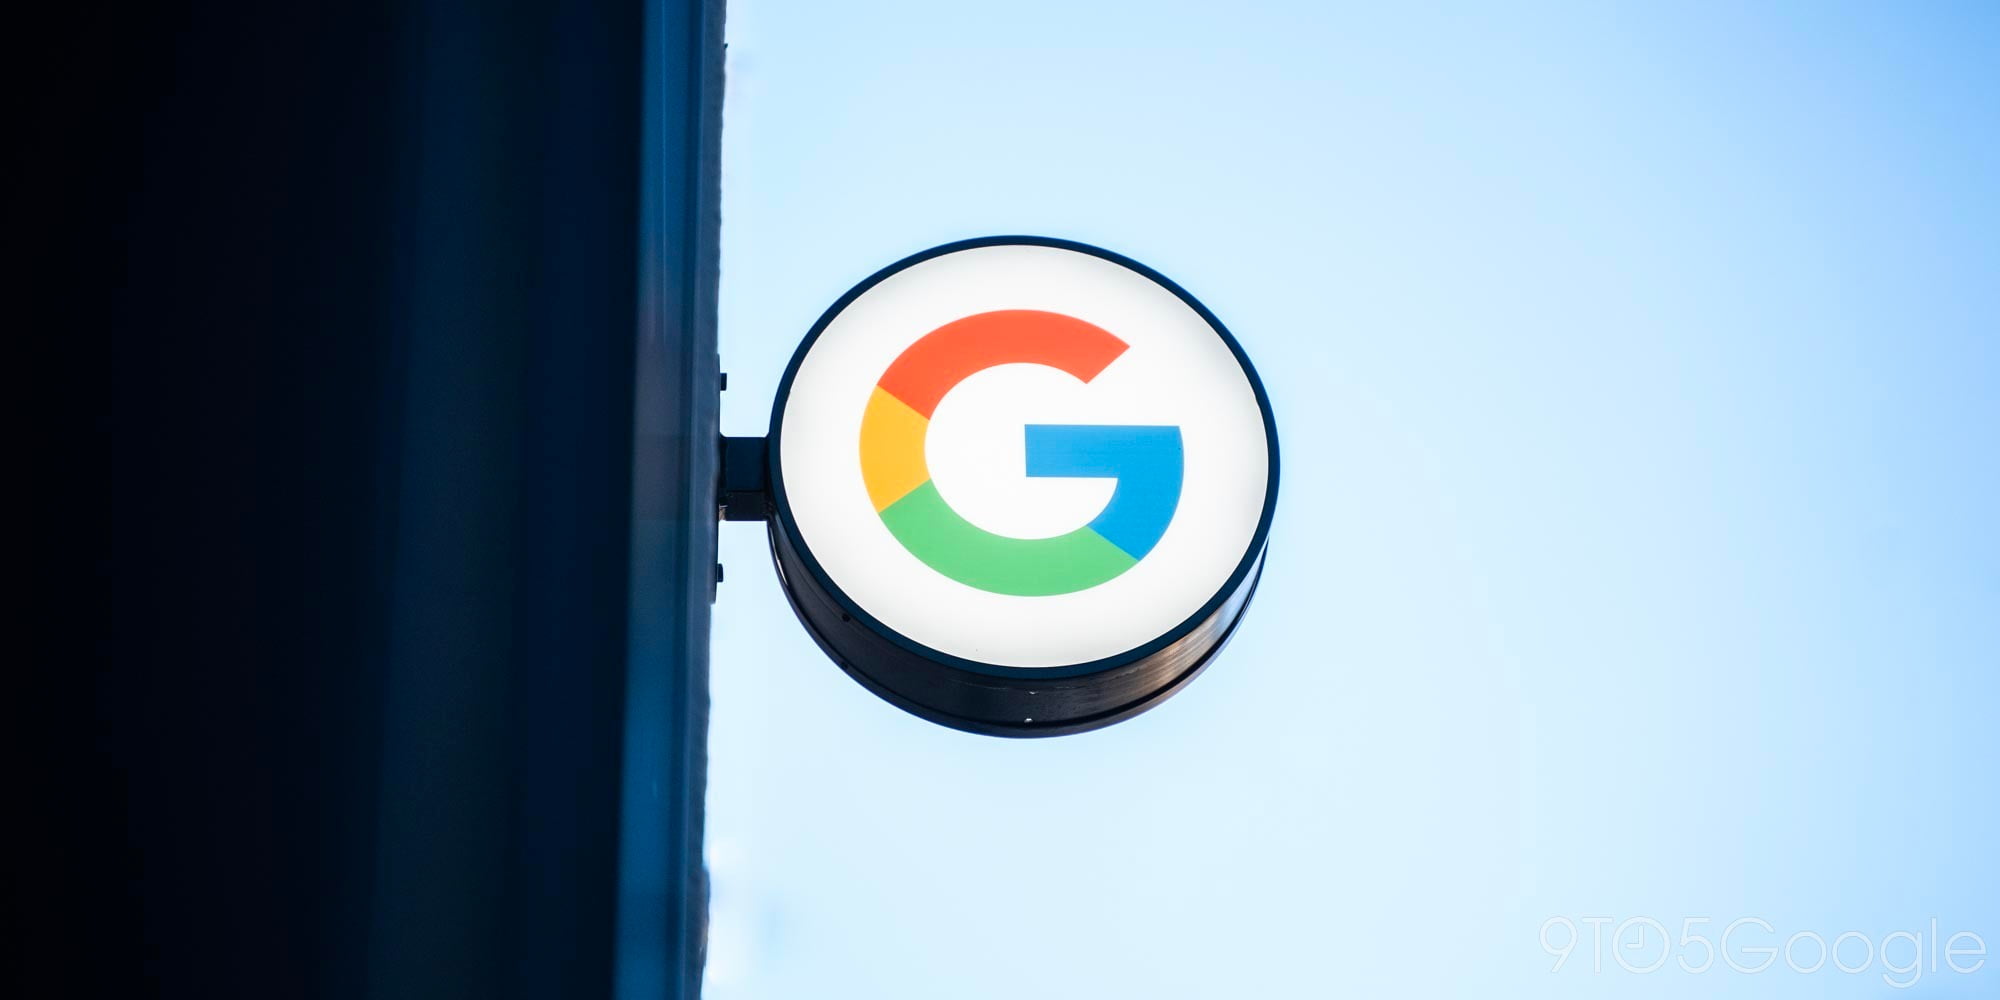 Google Pixel Buds app